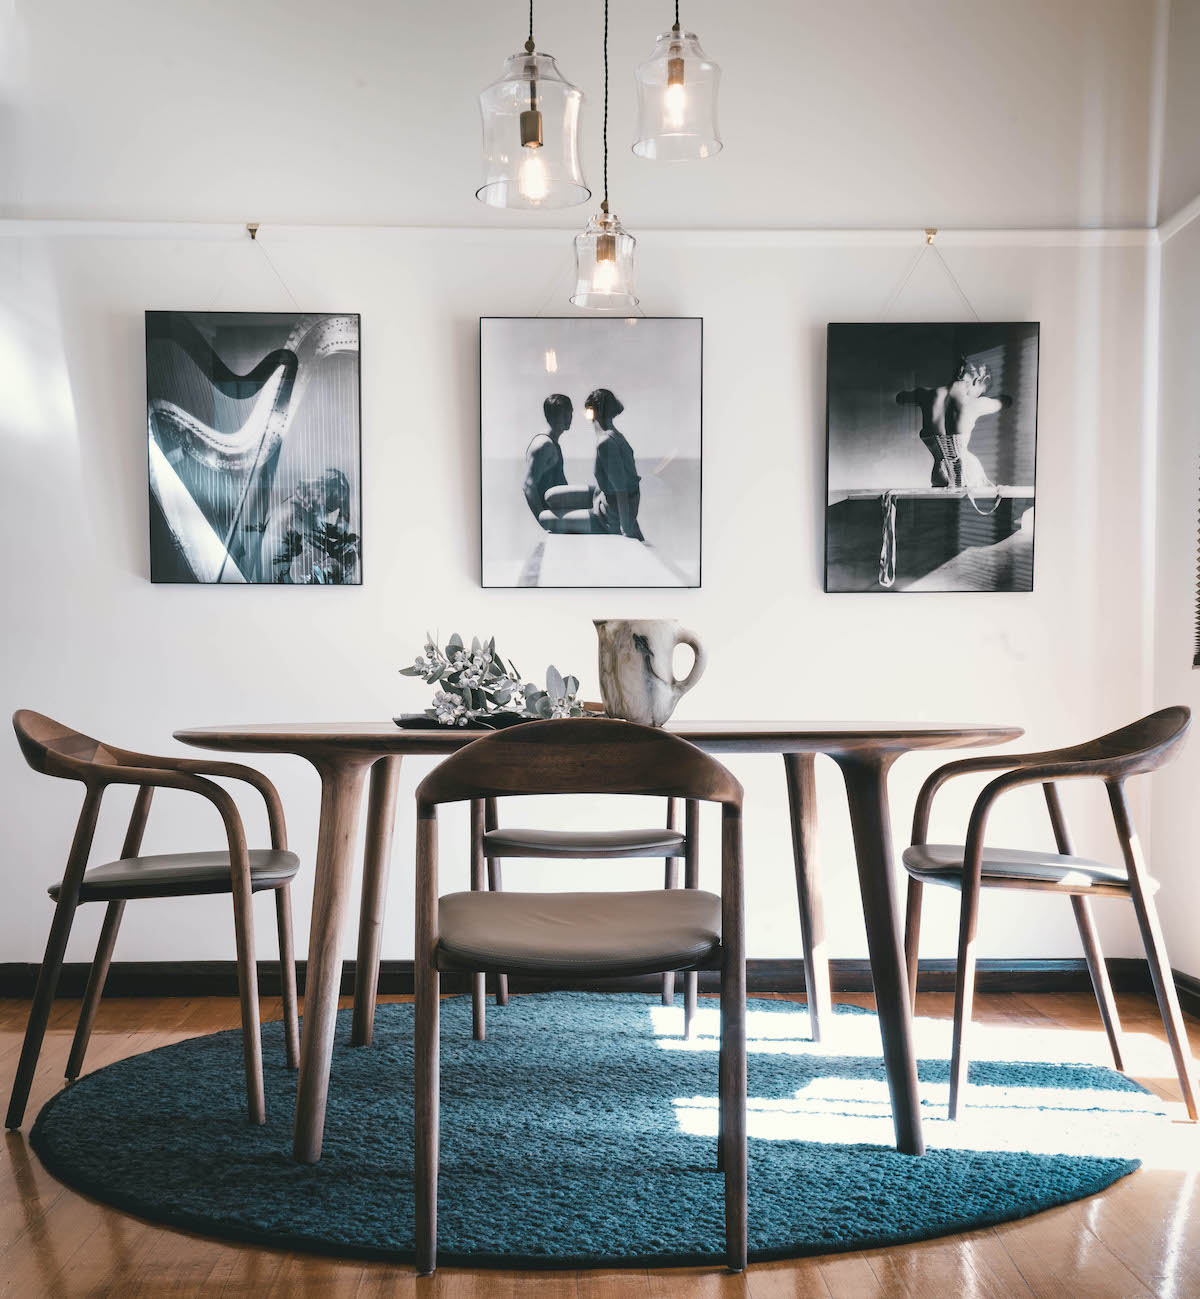 Moderná jedáleň s dizajnovými drevenými stoličkami